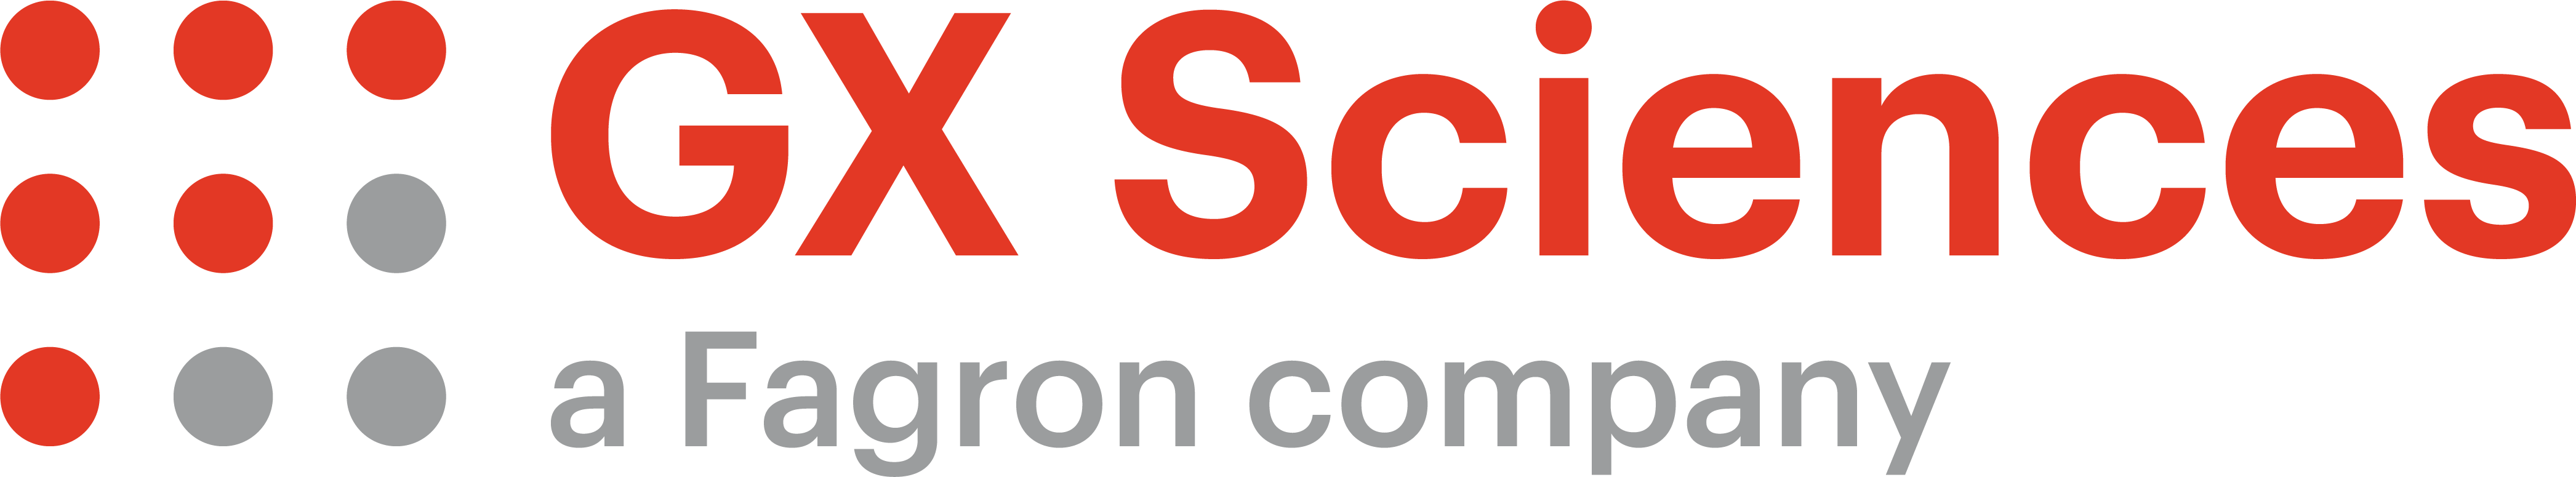 Gx Sciences Logo